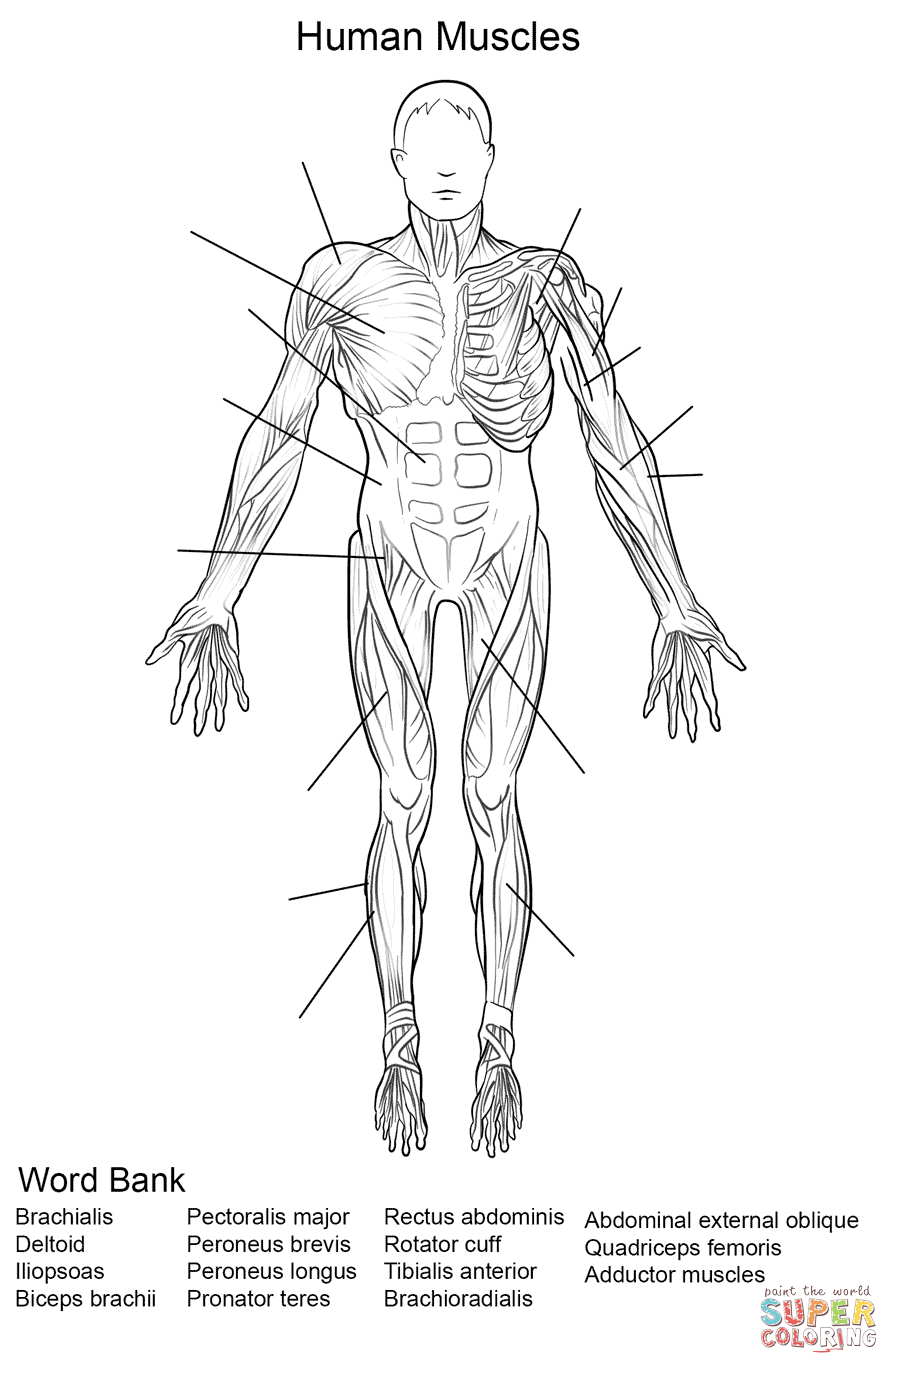 Human Muscles Front View Worksheet Coloring Page | Free Printable - Free Printable Human Anatomy Worksheets